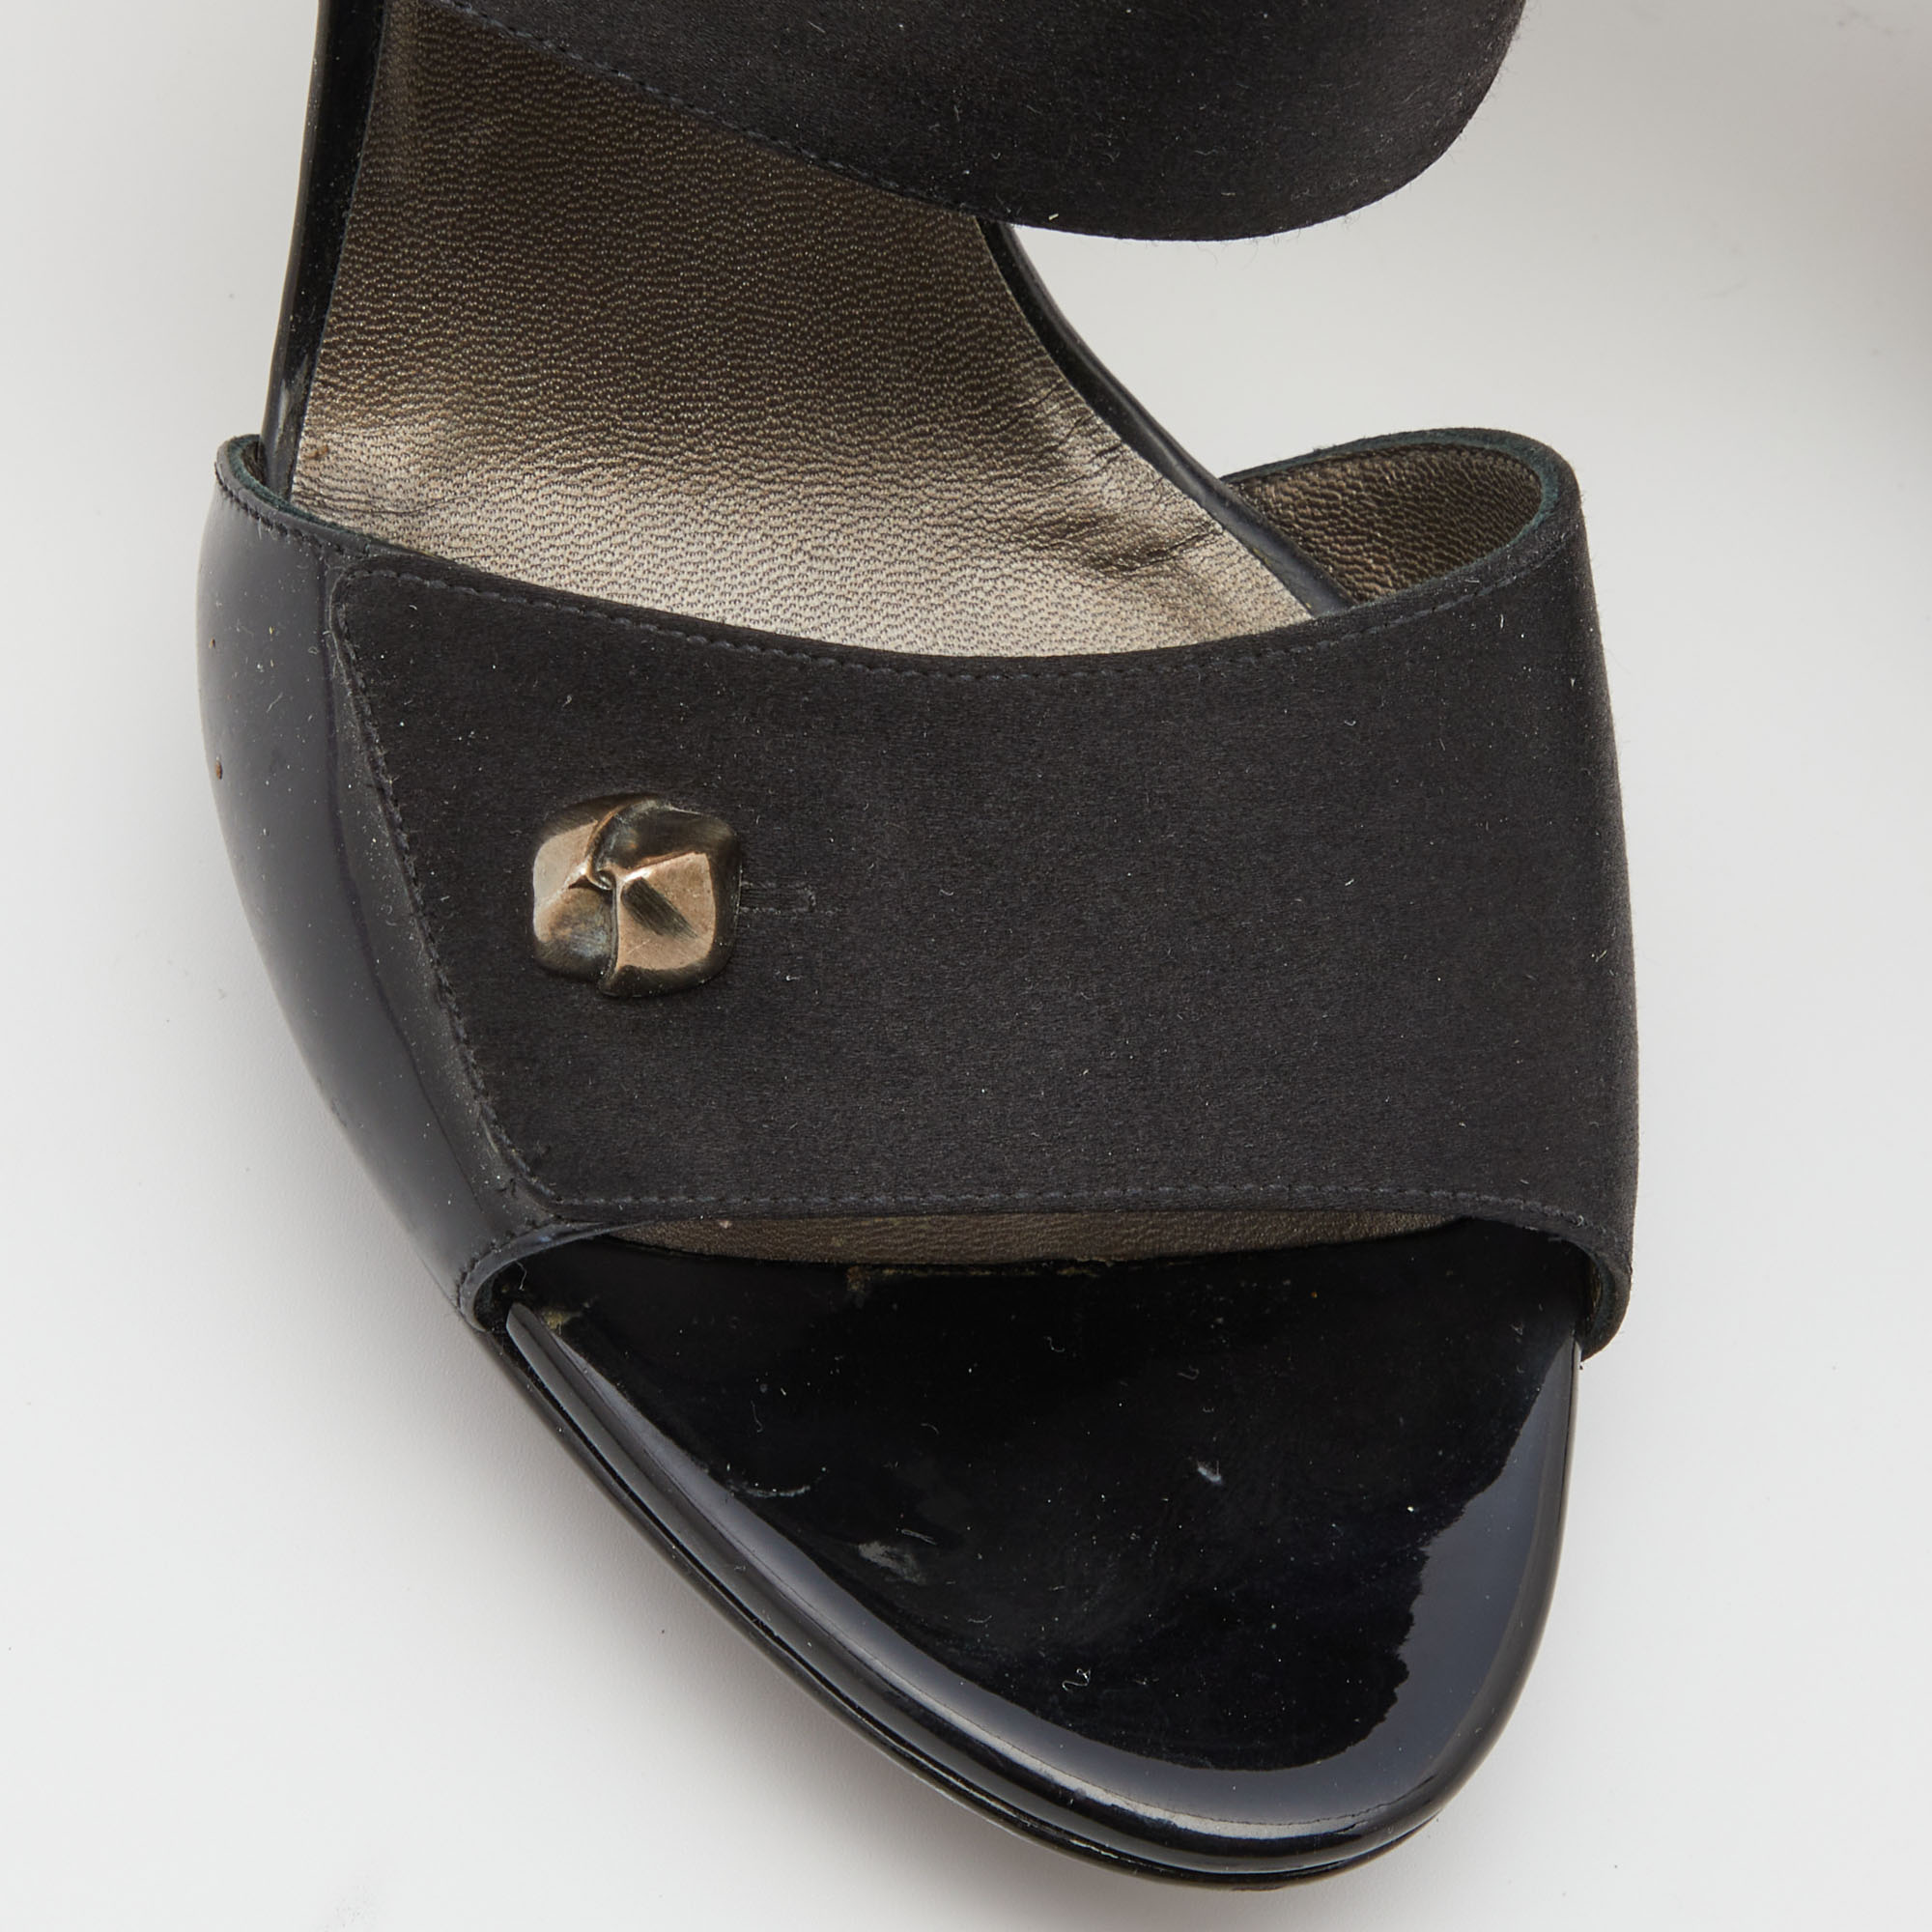 Salvatore Ferragamo Black Satin And Patent Leather Slingback Sandals Size 38